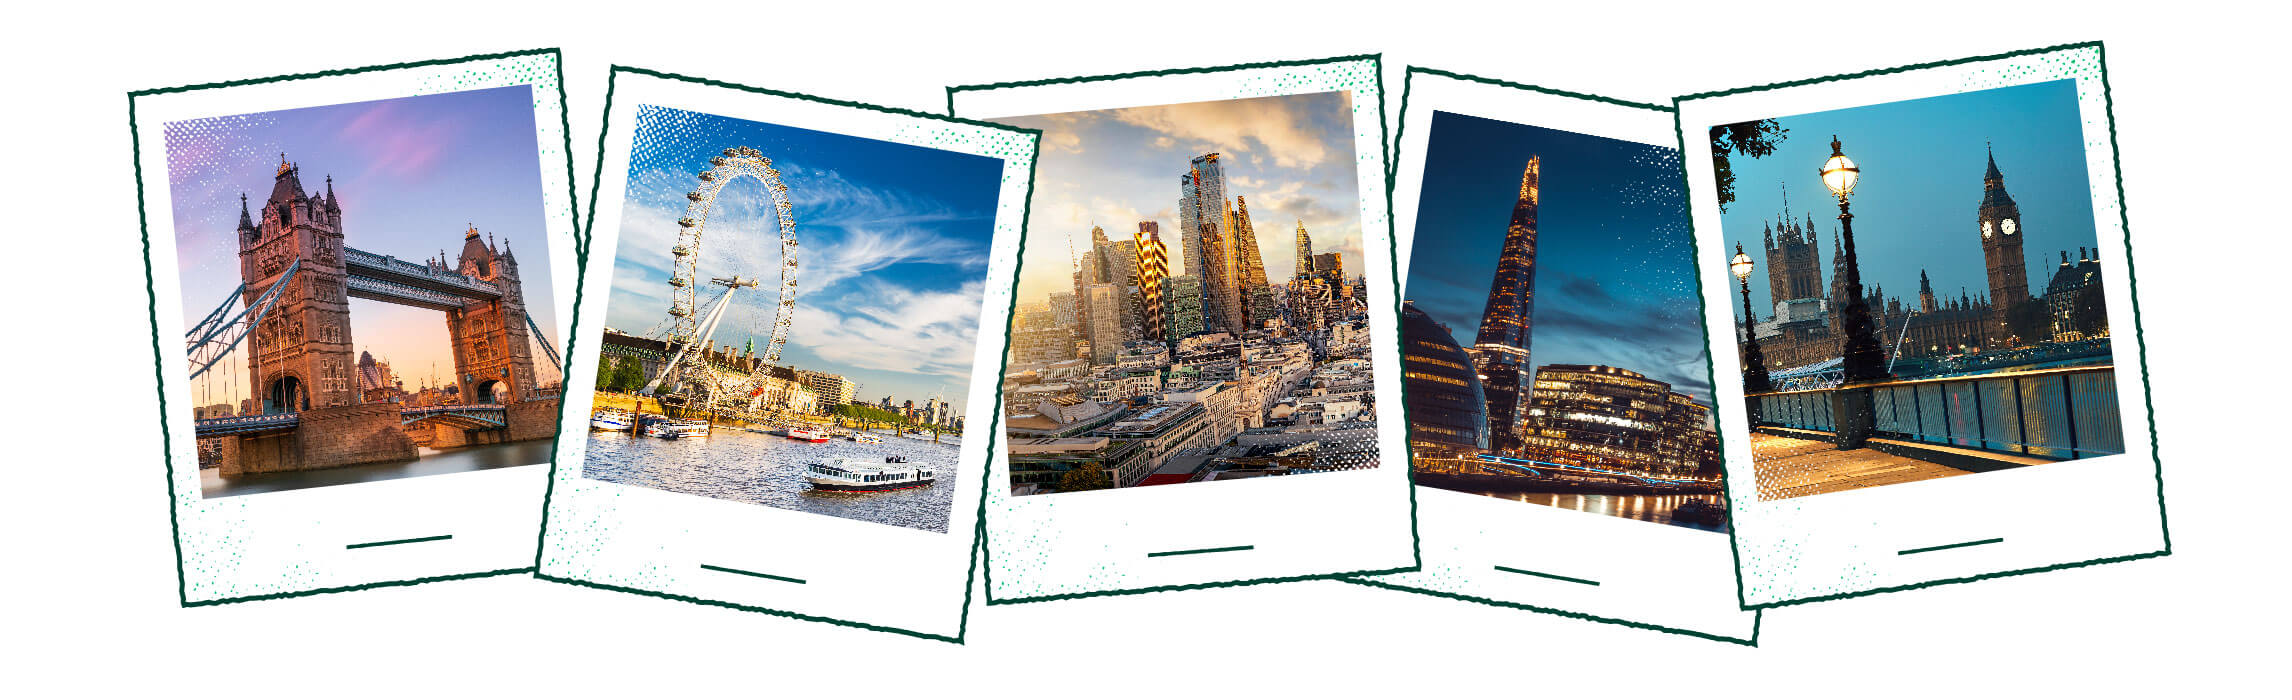 Photos of landmark destinations in London - Tower Bridge, London Eye, Houses of Parliament, The Shard, Canary Wharf